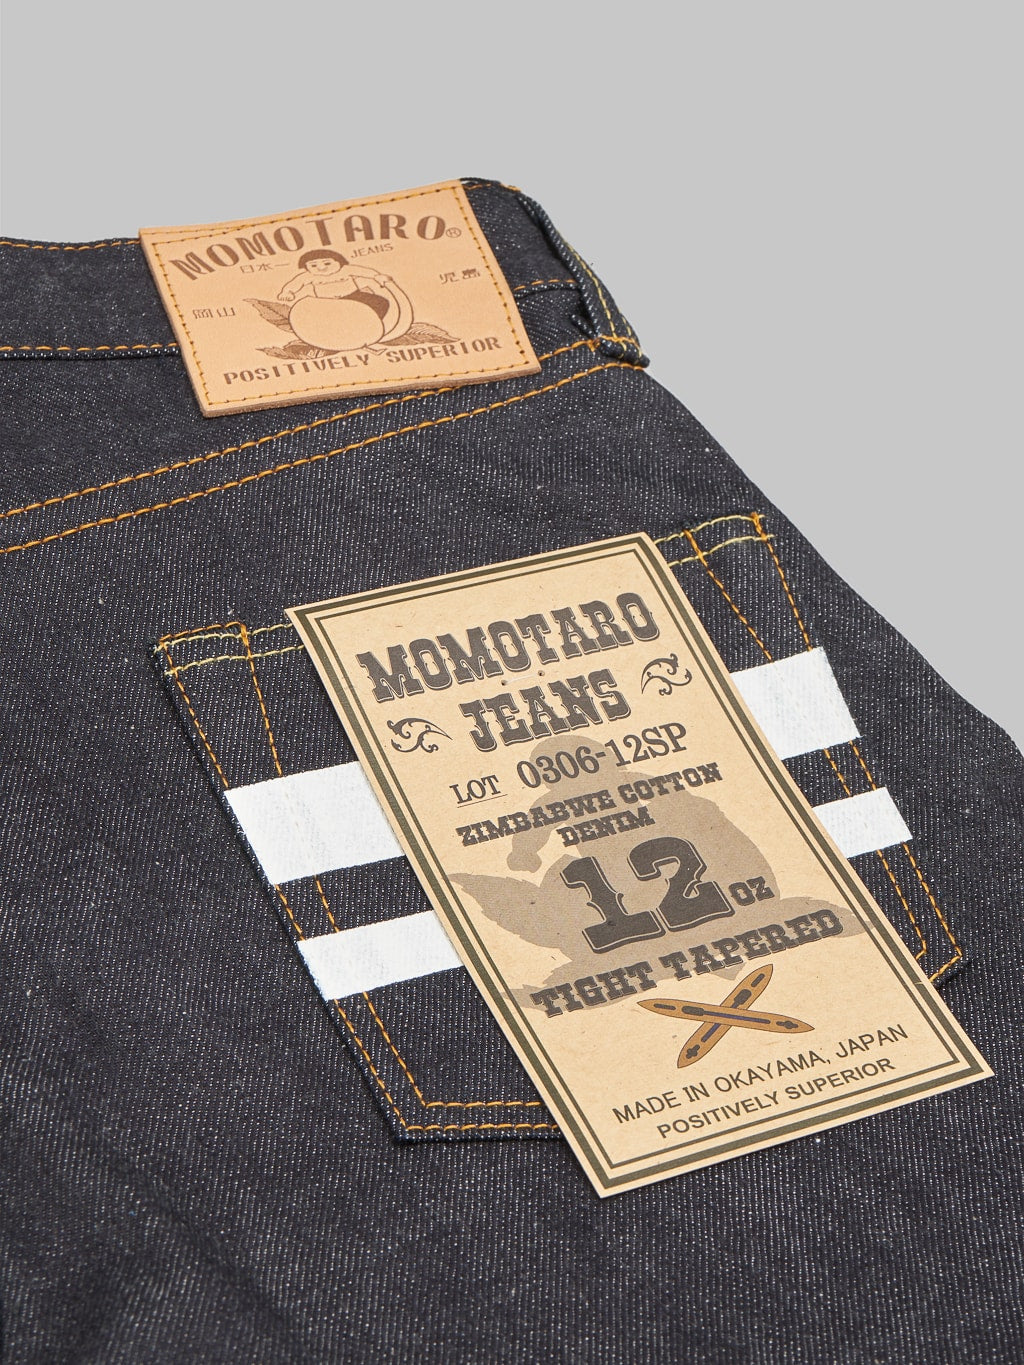 Momotaro 0306 12SP Going To Battle 12oz Tight Tapered Jeans pocket details